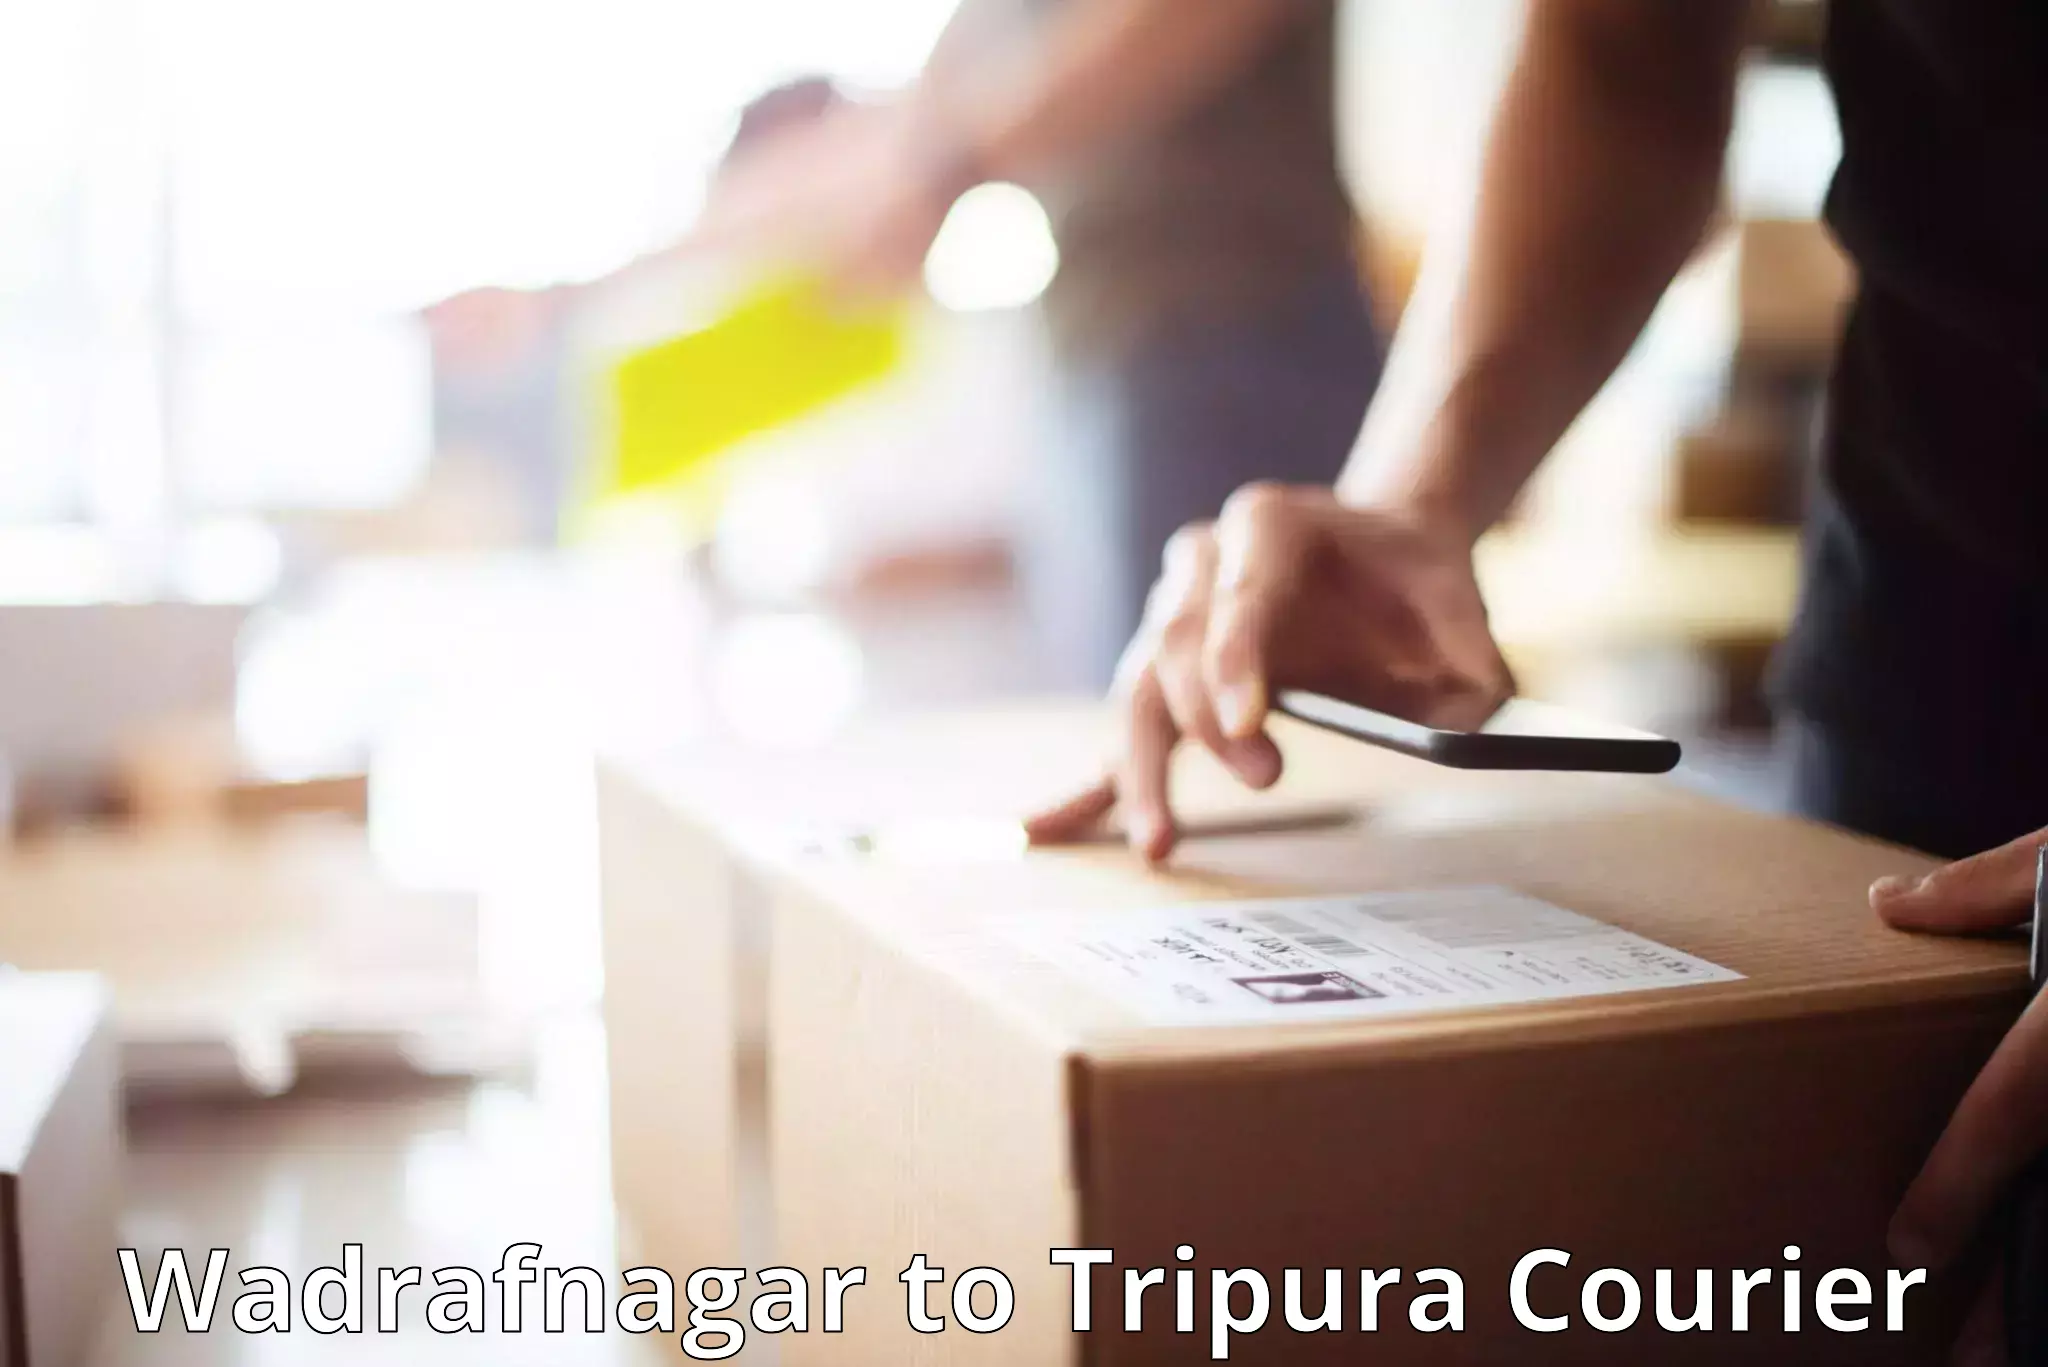 Doorstep luggage collection in Wadrafnagar to Udaipur Tripura